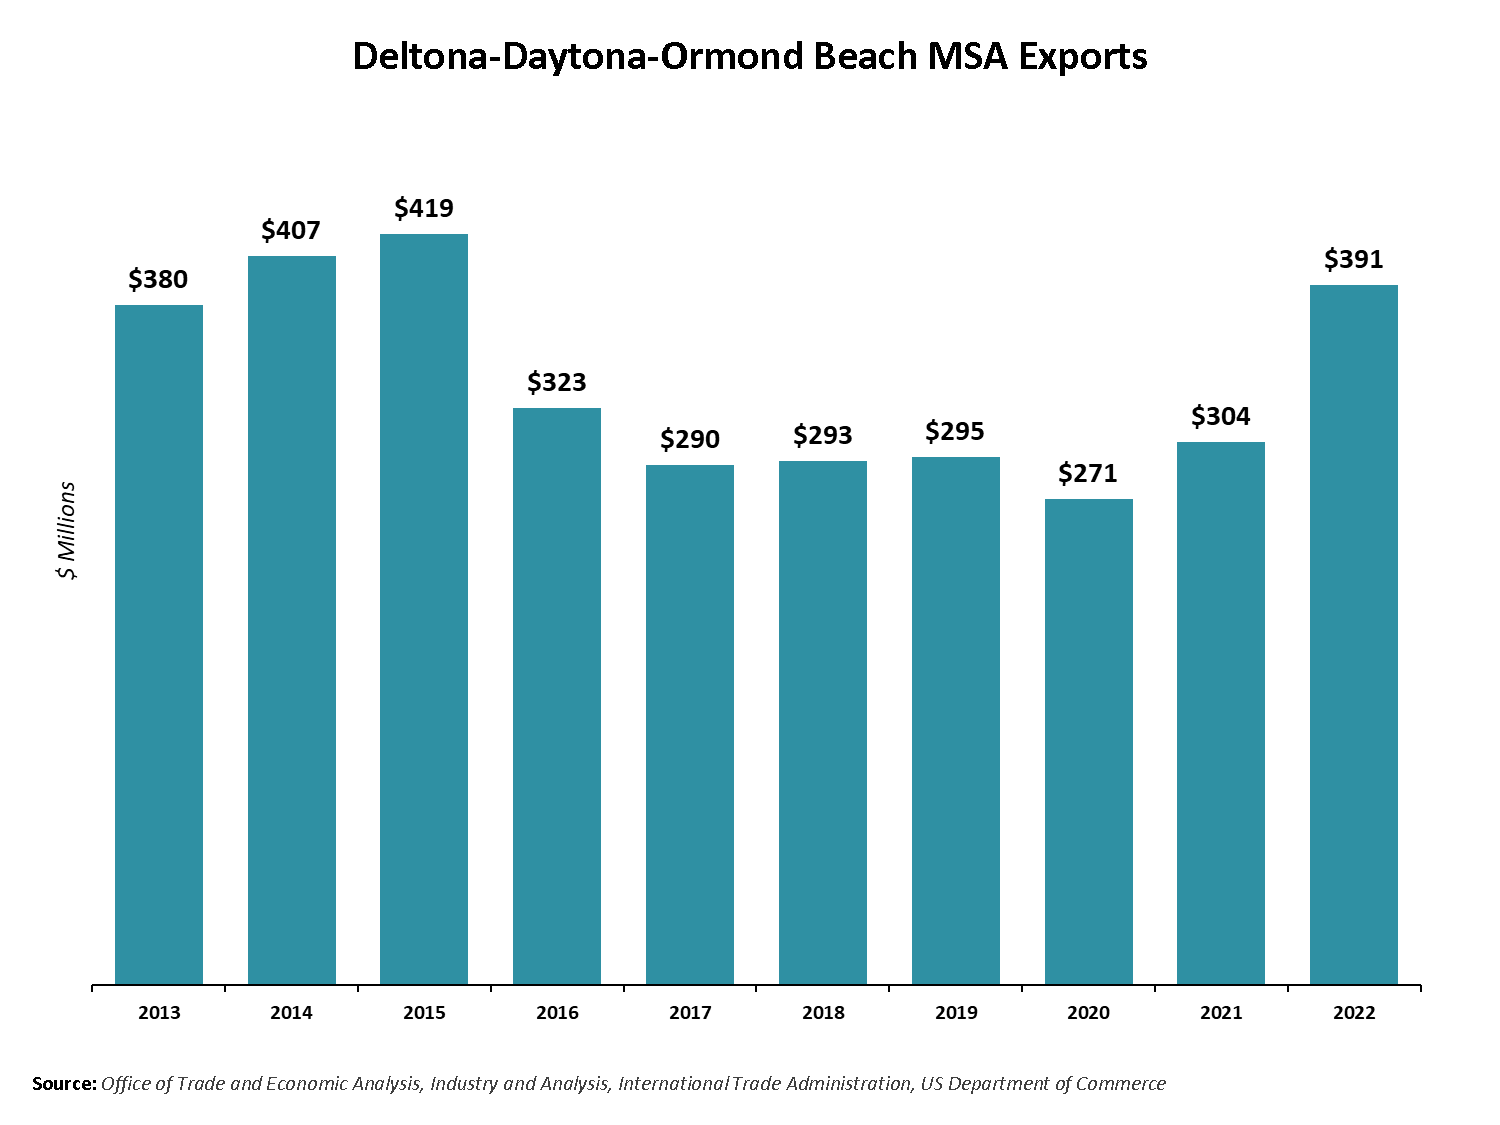 Deltona-Daytona-Ormond Beach MSA Exports chart. Click image for pdf of chart with details.